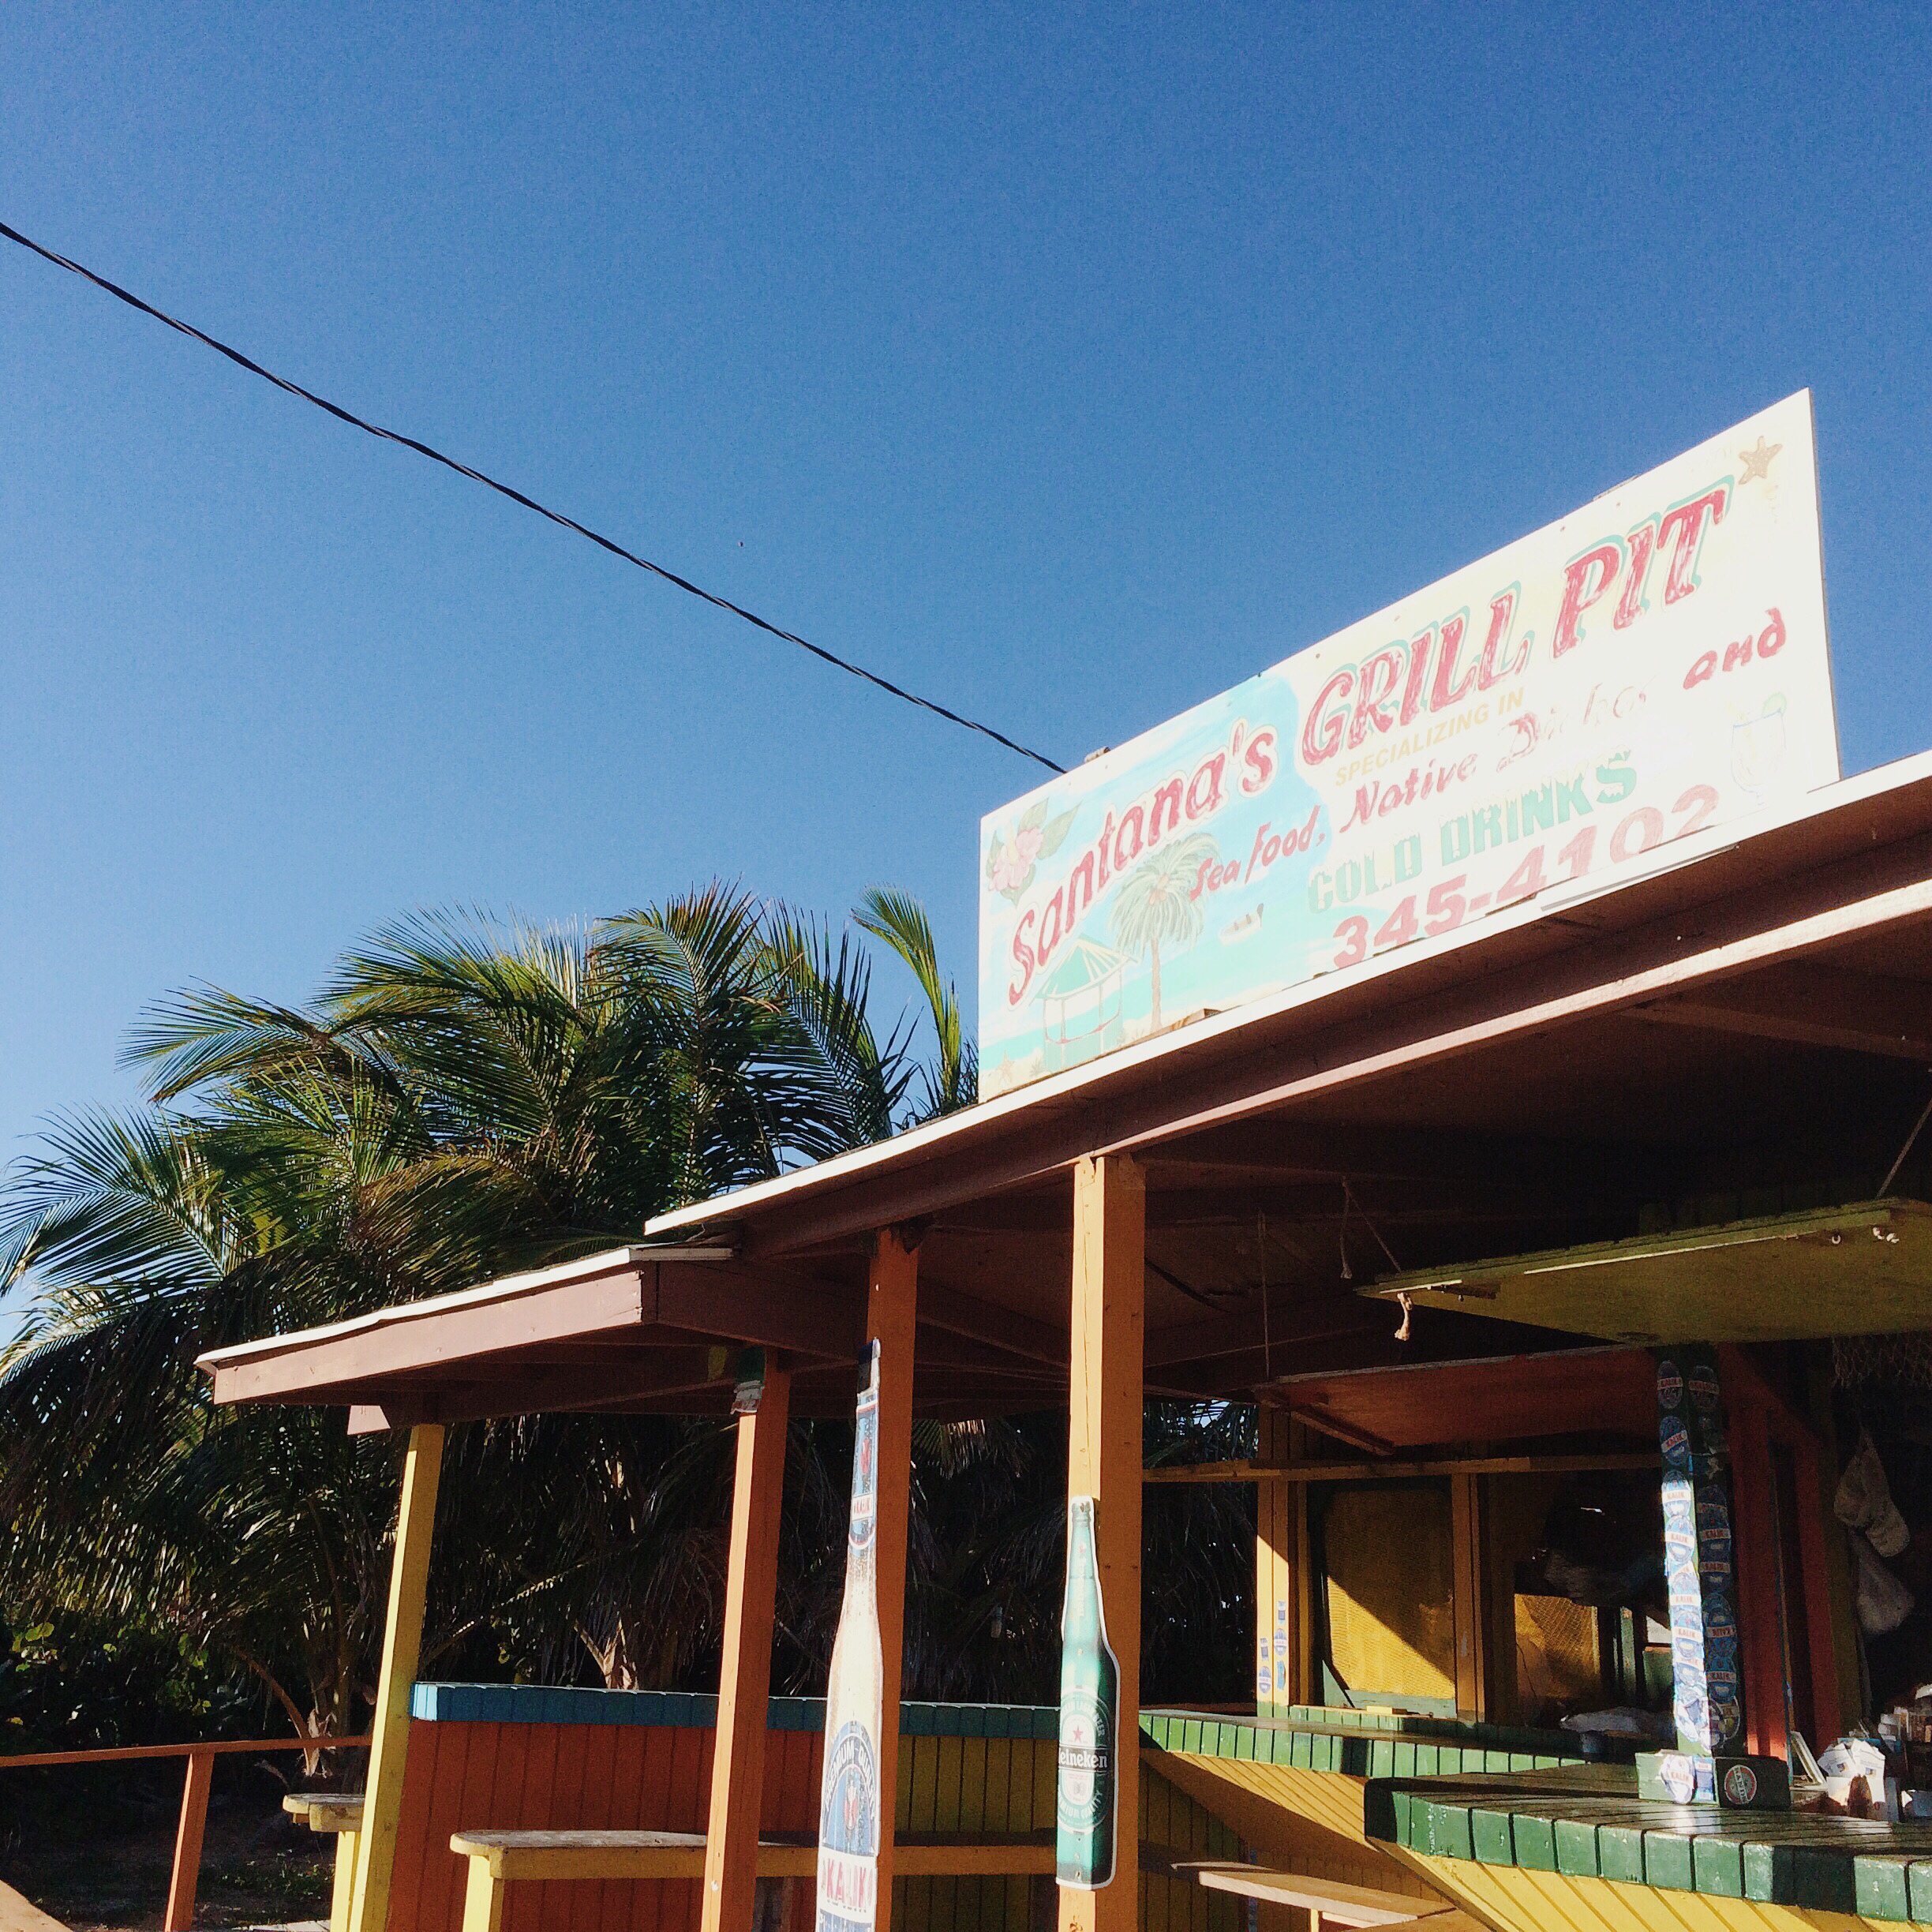 Santana's Grill Pit | Traveling to The Exumas, Bahamas | Guide to Exumas, Bahamas | elanaloo.com